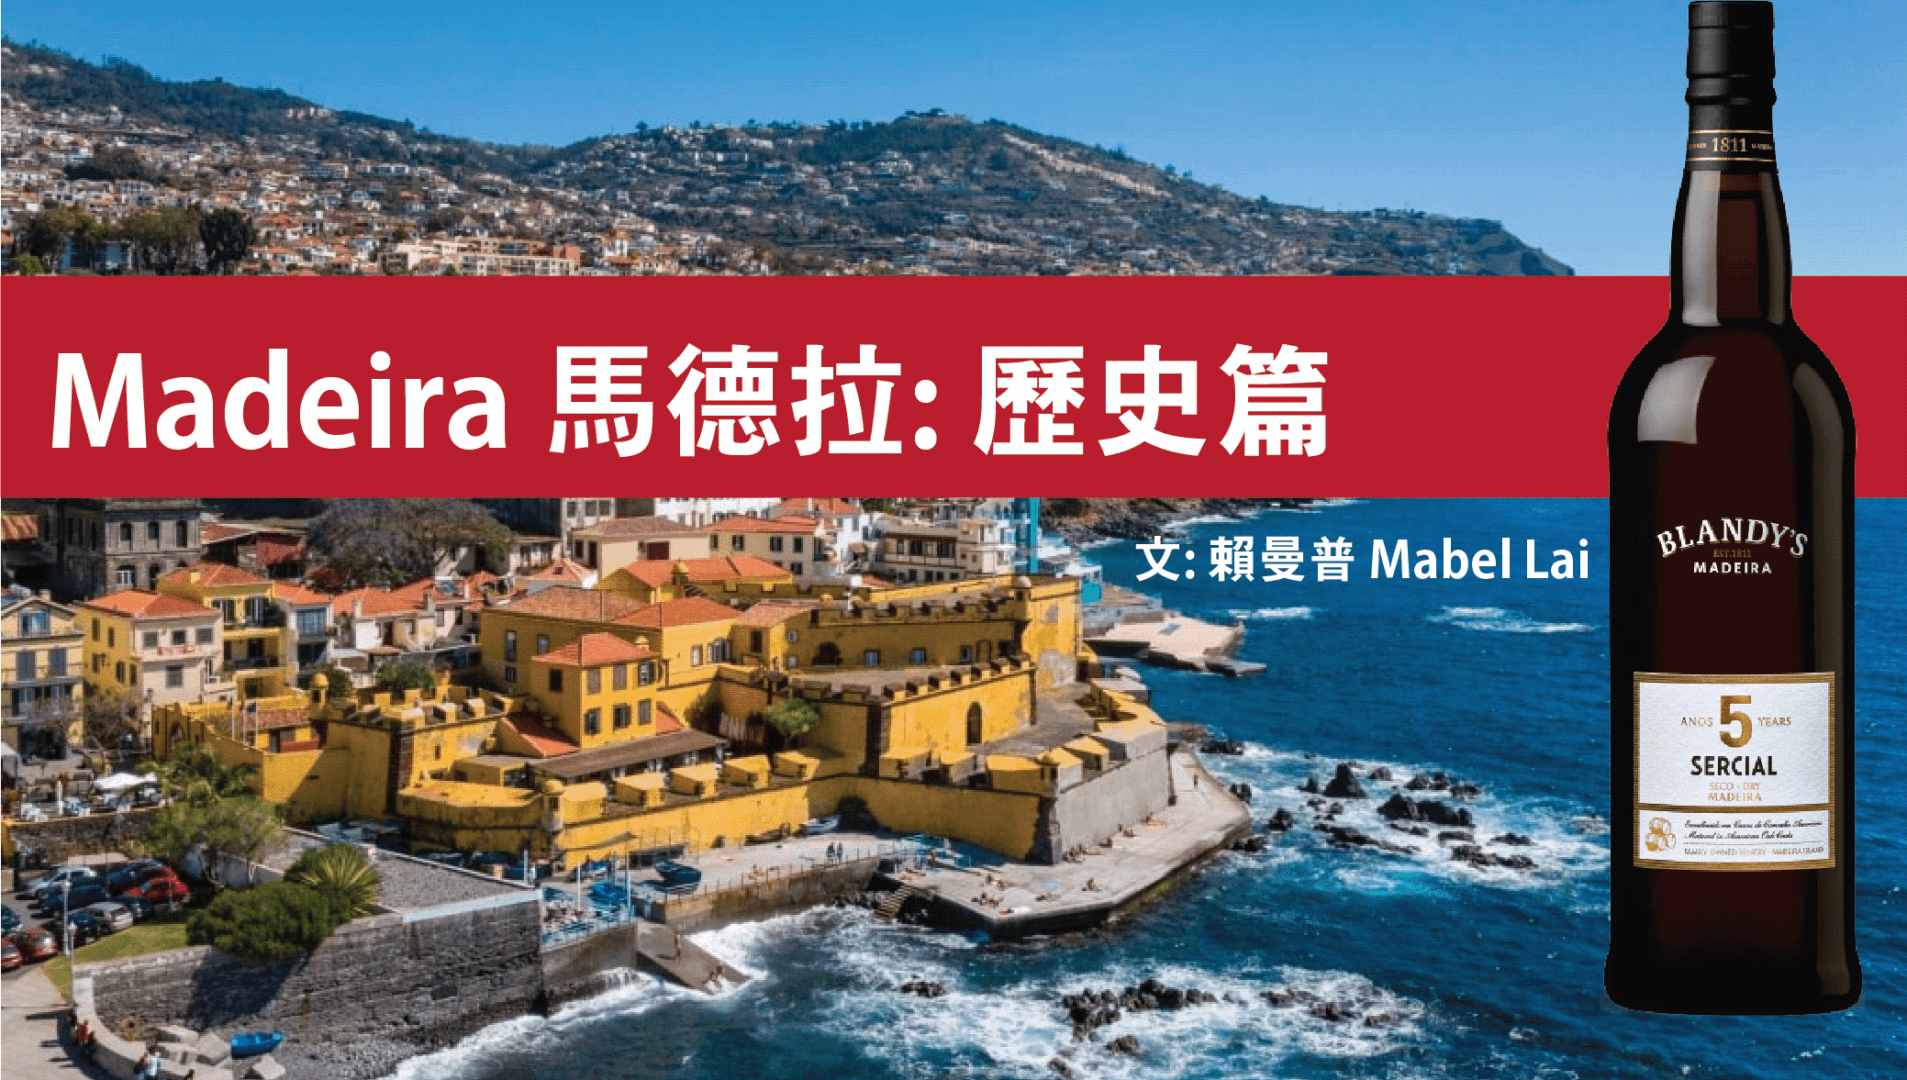 Madeira 馬德拉: 歷史篇 - WineNow HK 專欄文章